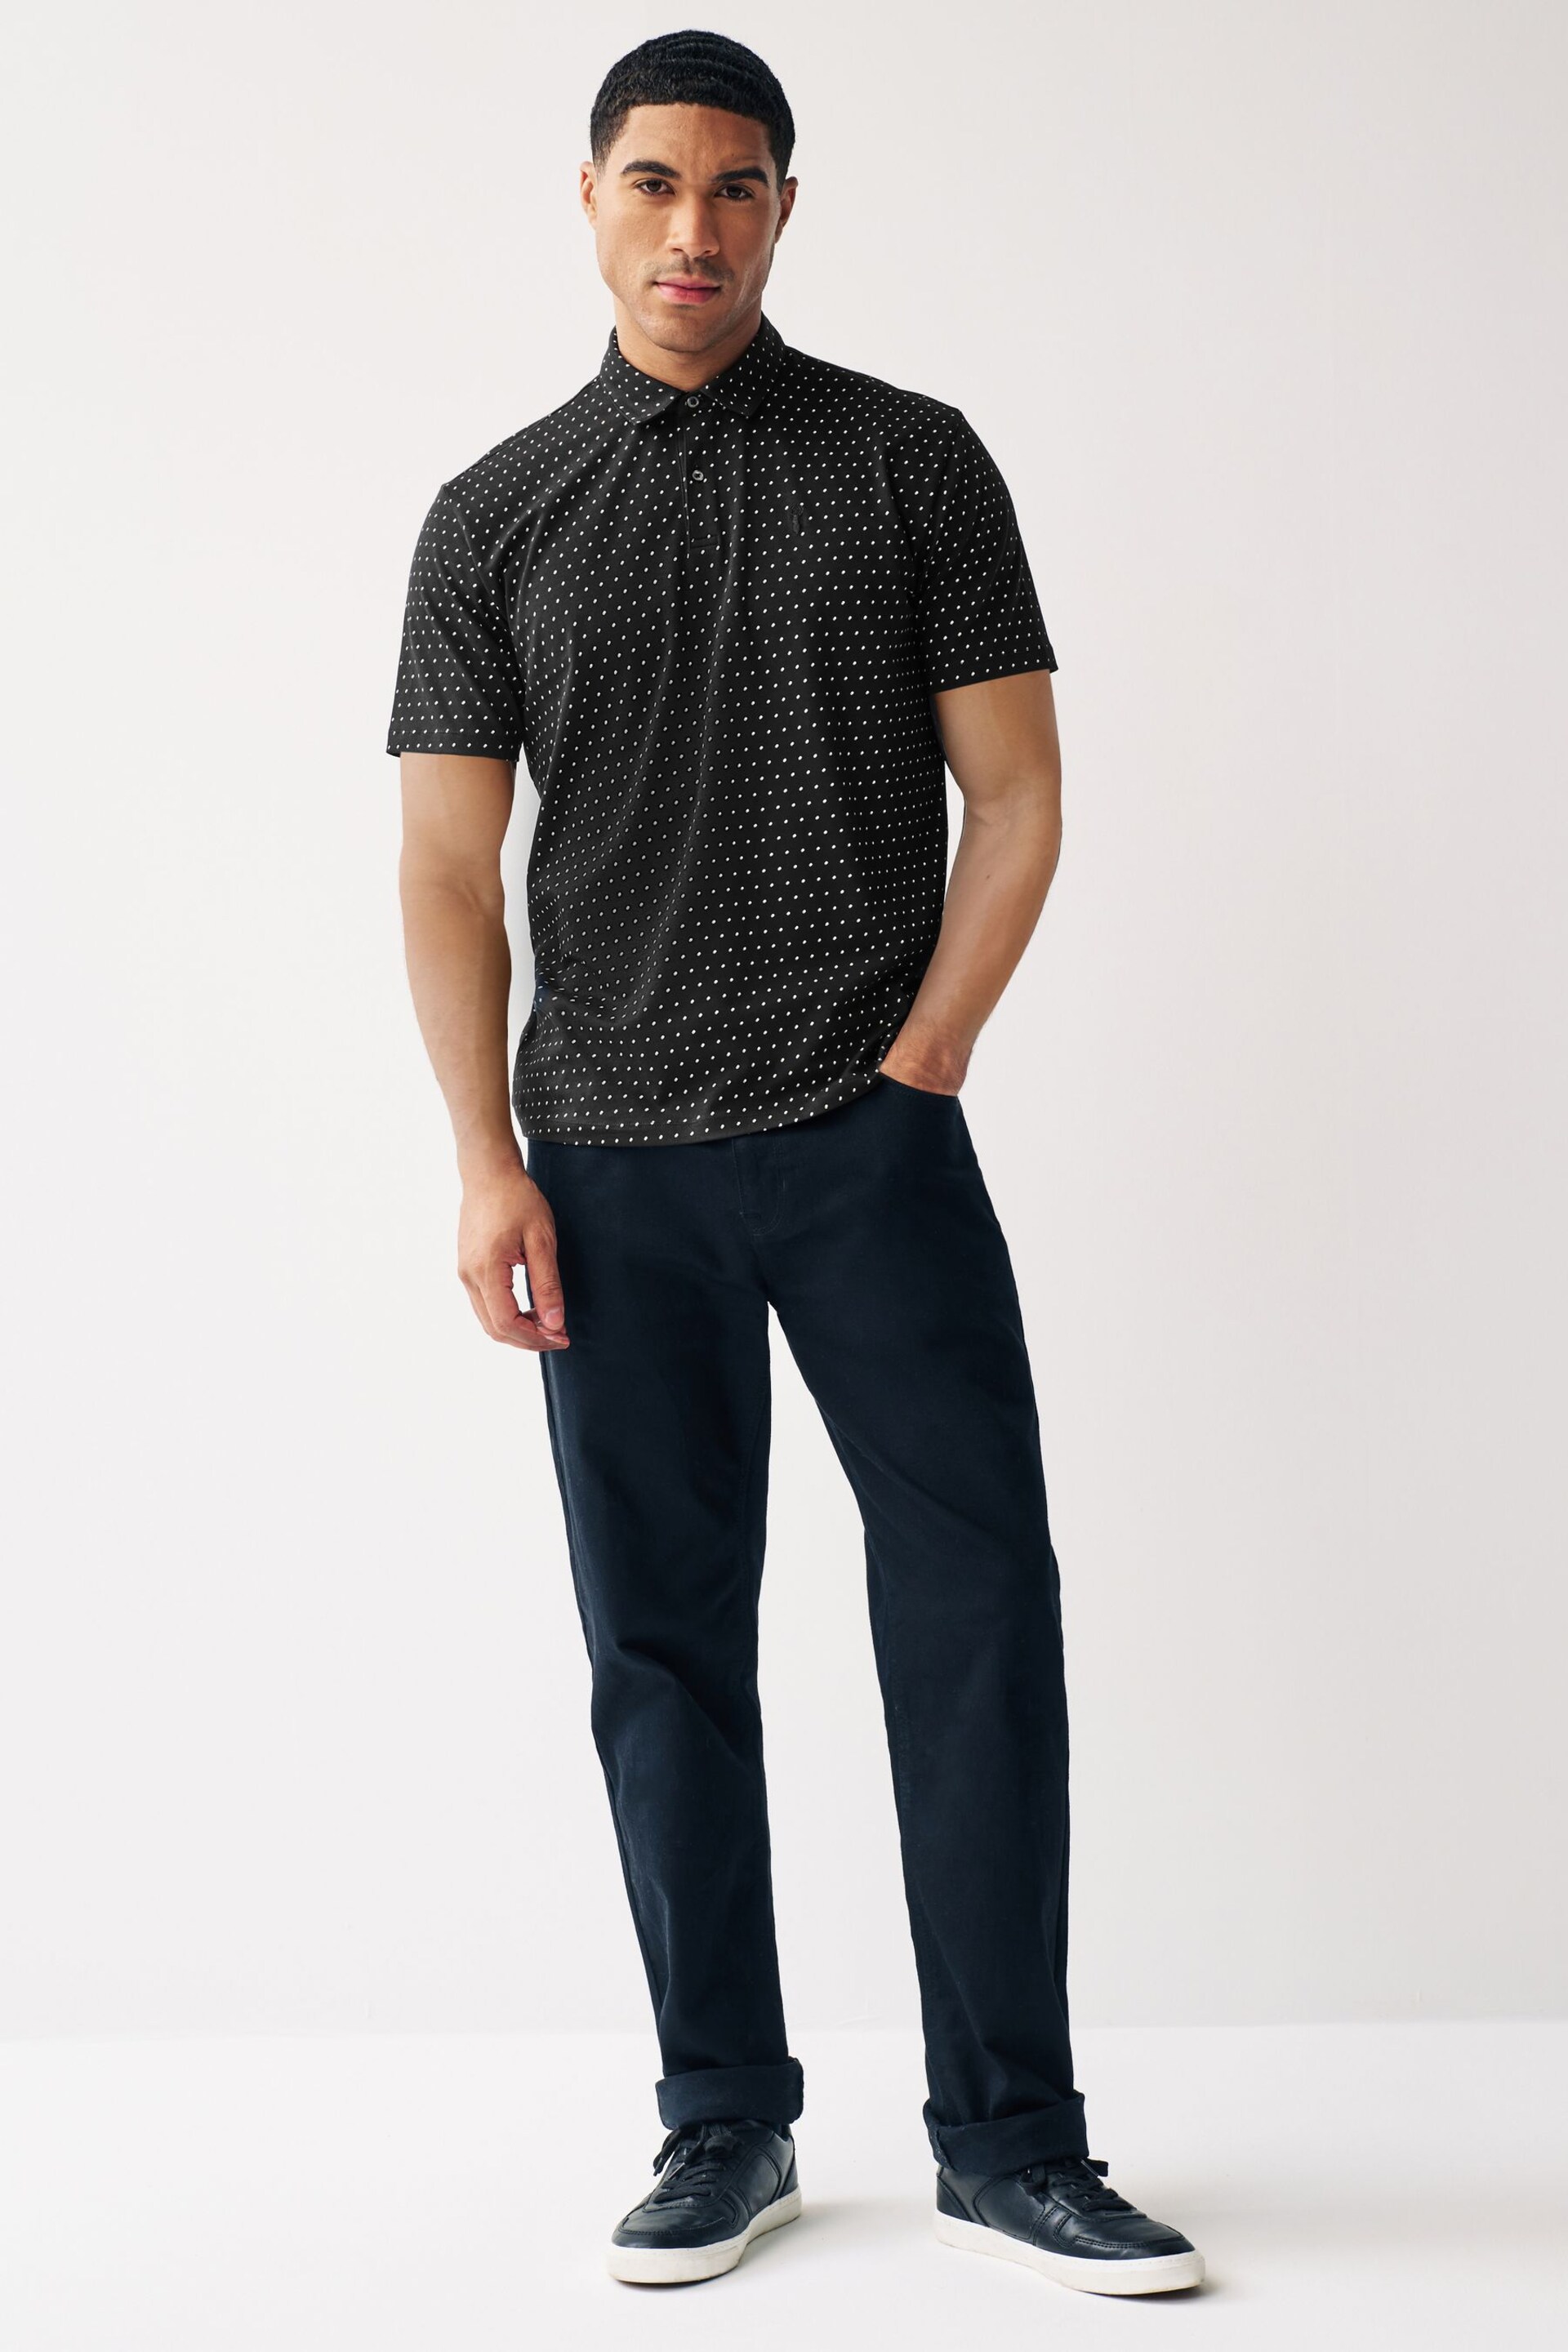 Black Short Sleeve Polka Dot Polo Shirt - Image 2 of 8